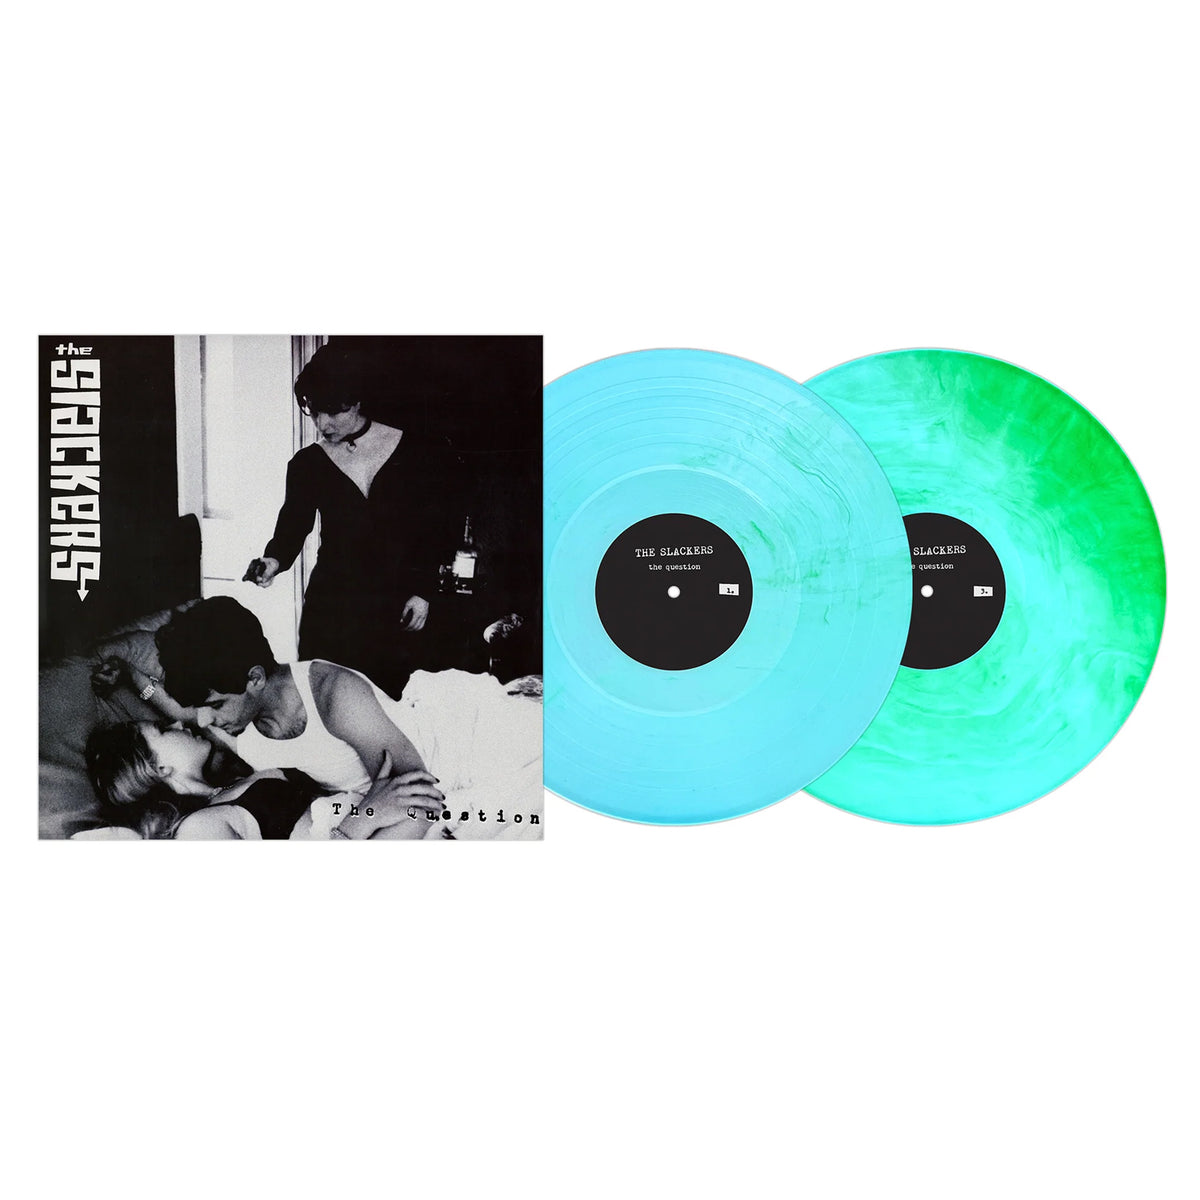 The Slackers - The Question Blue &amp; Green Galaxy Vinyl 2xLP